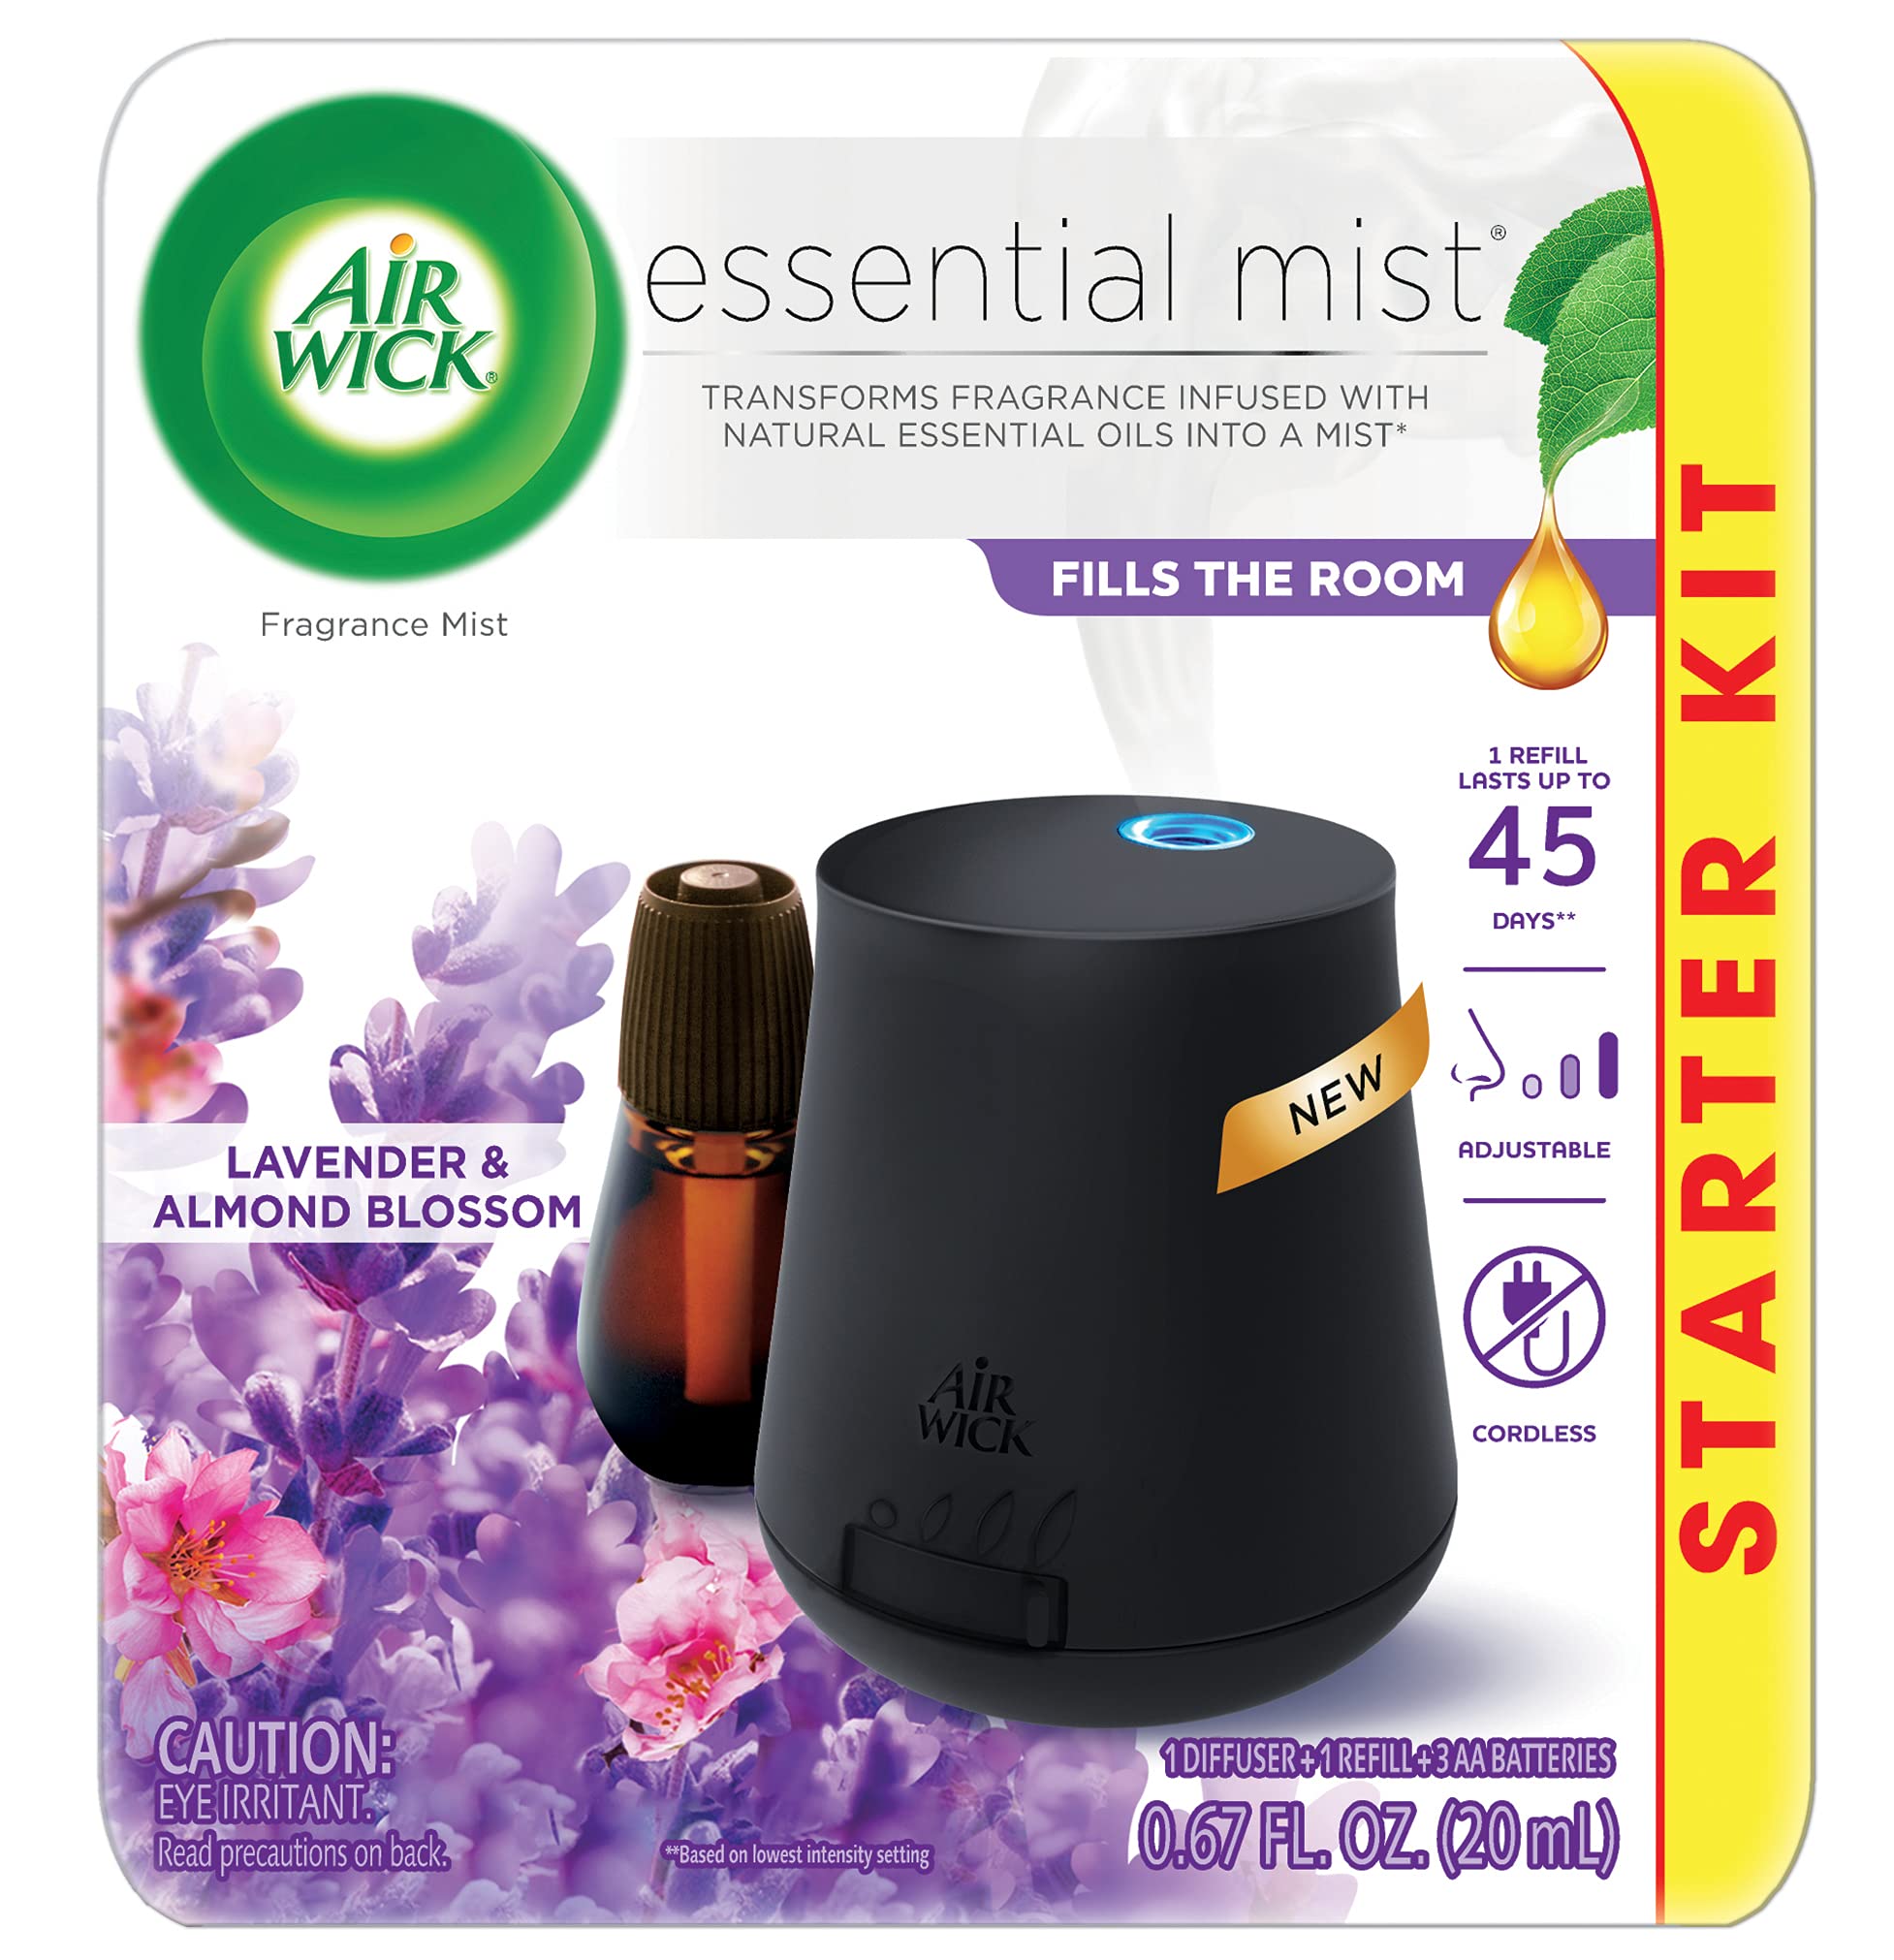 Air Wick Essential Mist, Assorted Fragrances, 1 Diffuser + 3 Refills